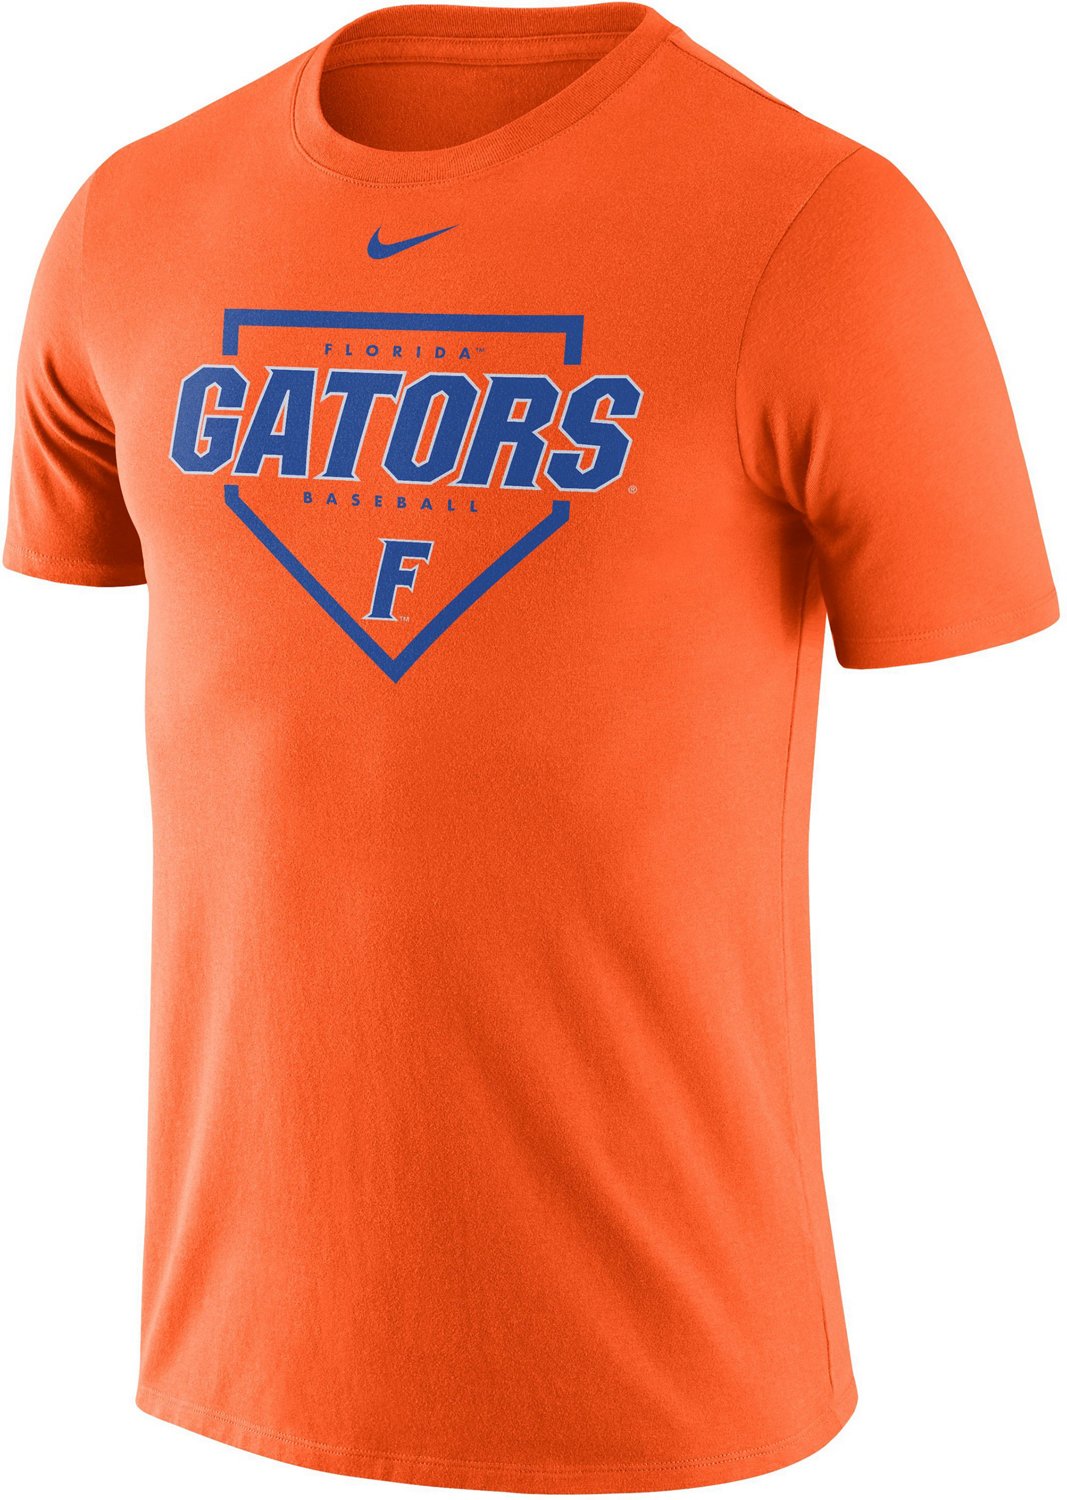 Florida Baseball Gear, Florida Gators Baseball Jerseys, University